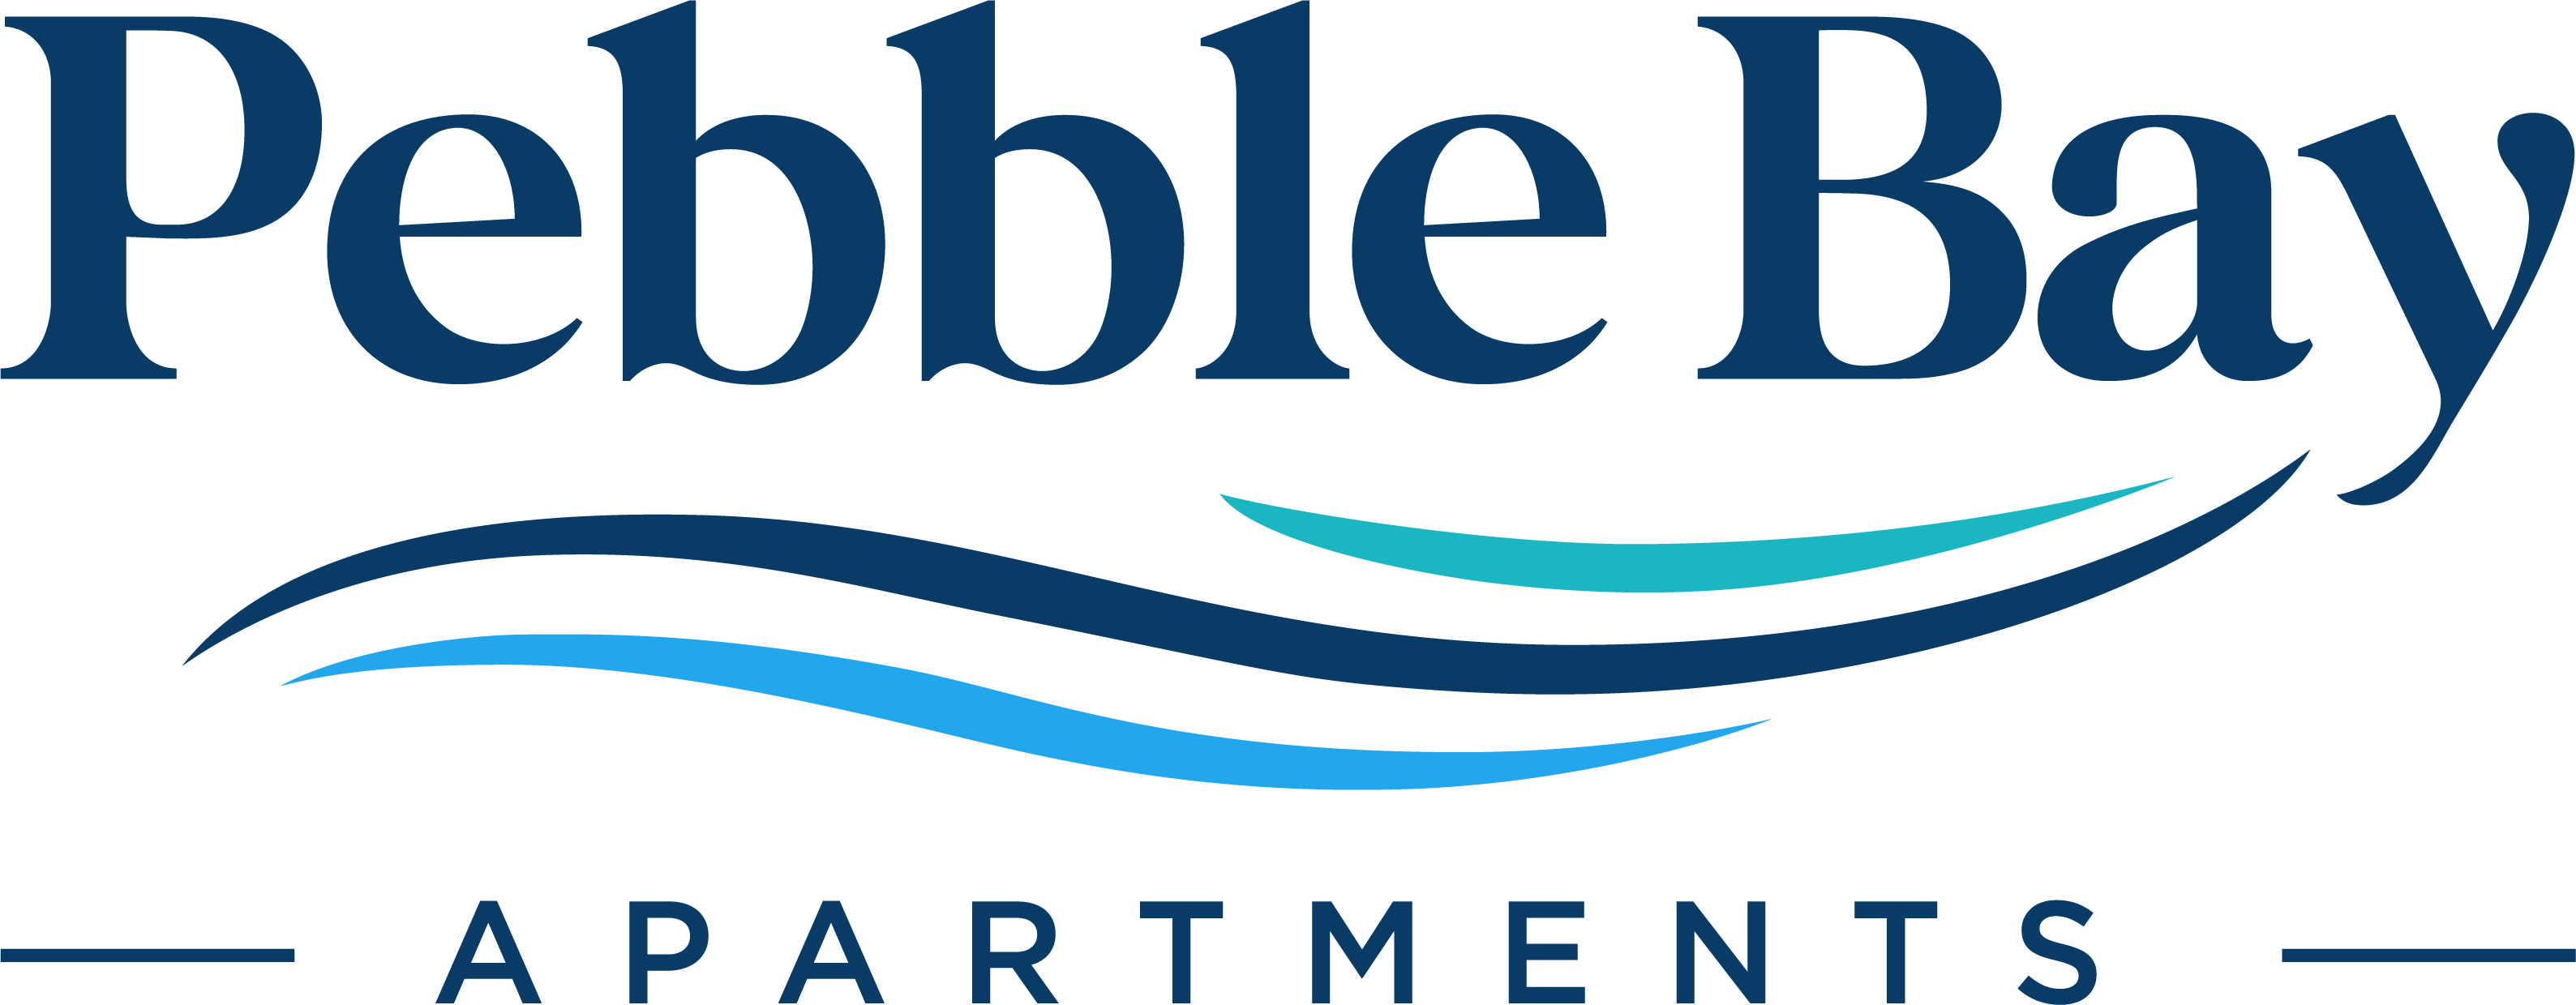 Pebble Bay Apartments Logo